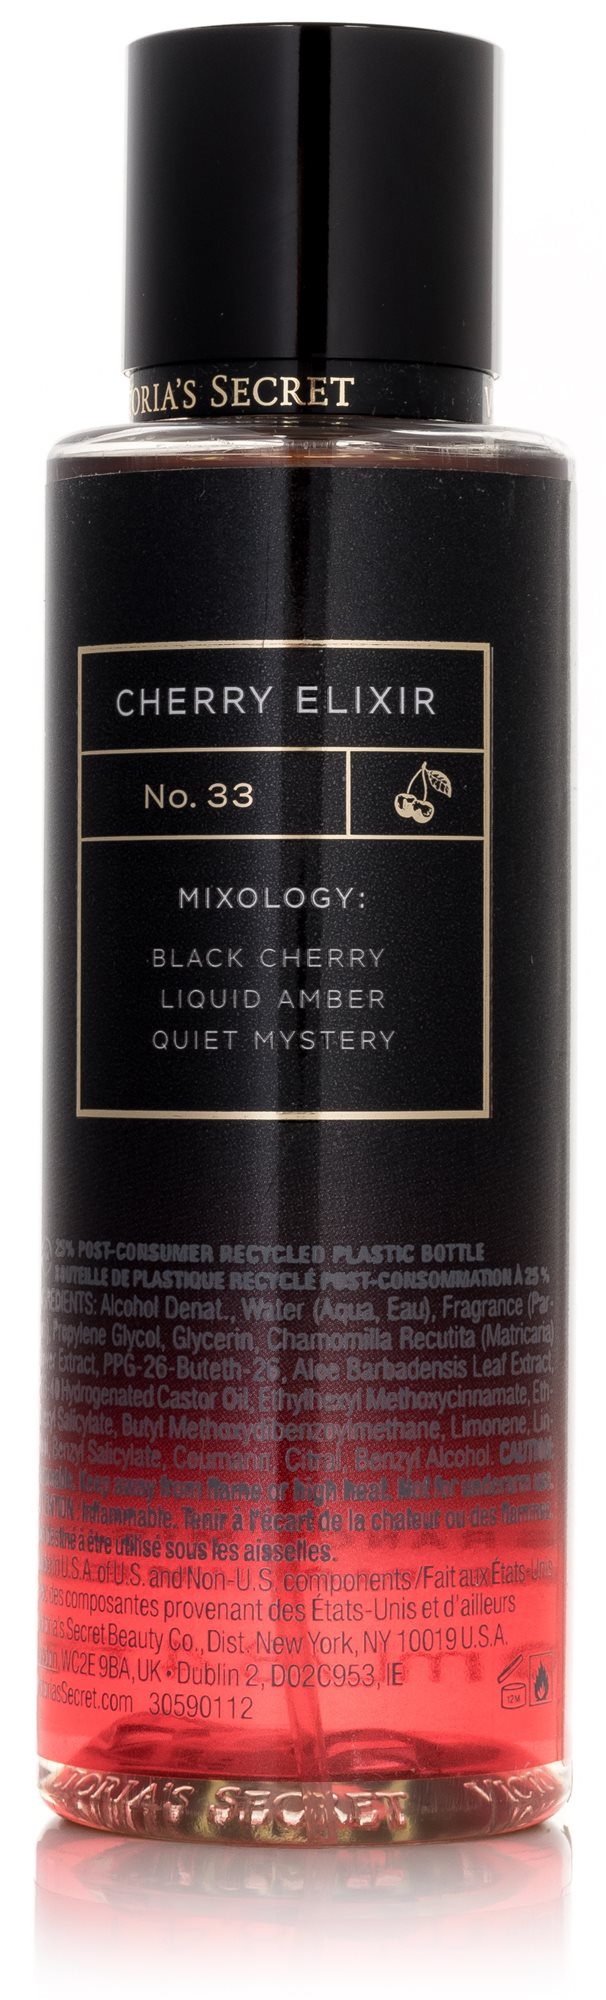 VICTORIA'S SECRET Cherry Elixir No. 33 250 ml